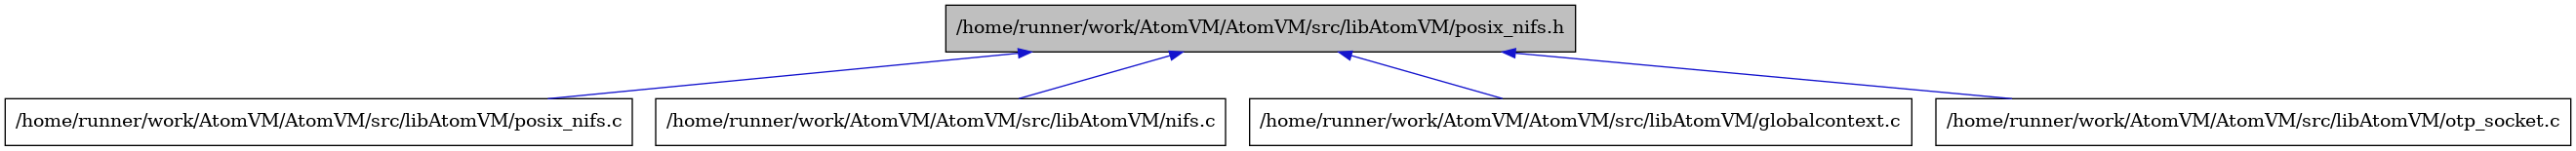 digraph {
    graph [bgcolor="#00000000"]
    node [shape=rectangle style=filled fillcolor="#FFFFFF" font=Helvetica padding=2]
    edge [color="#1414CE"]
    "5" [label="/home/runner/work/AtomVM/AtomVM/src/libAtomVM/posix_nifs.c" tooltip="/home/runner/work/AtomVM/AtomVM/src/libAtomVM/posix_nifs.c"]
    "1" [label="/home/runner/work/AtomVM/AtomVM/src/libAtomVM/posix_nifs.h" tooltip="/home/runner/work/AtomVM/AtomVM/src/libAtomVM/posix_nifs.h" fillcolor="#BFBFBF"]
    "3" [label="/home/runner/work/AtomVM/AtomVM/src/libAtomVM/nifs.c" tooltip="/home/runner/work/AtomVM/AtomVM/src/libAtomVM/nifs.c"]
    "2" [label="/home/runner/work/AtomVM/AtomVM/src/libAtomVM/globalcontext.c" tooltip="/home/runner/work/AtomVM/AtomVM/src/libAtomVM/globalcontext.c"]
    "4" [label="/home/runner/work/AtomVM/AtomVM/src/libAtomVM/otp_socket.c" tooltip="/home/runner/work/AtomVM/AtomVM/src/libAtomVM/otp_socket.c"]
    "1" -> "2" [dir=back tooltip="include"]
    "1" -> "3" [dir=back tooltip="include"]
    "1" -> "4" [dir=back tooltip="include"]
    "1" -> "5" [dir=back tooltip="include"]
}